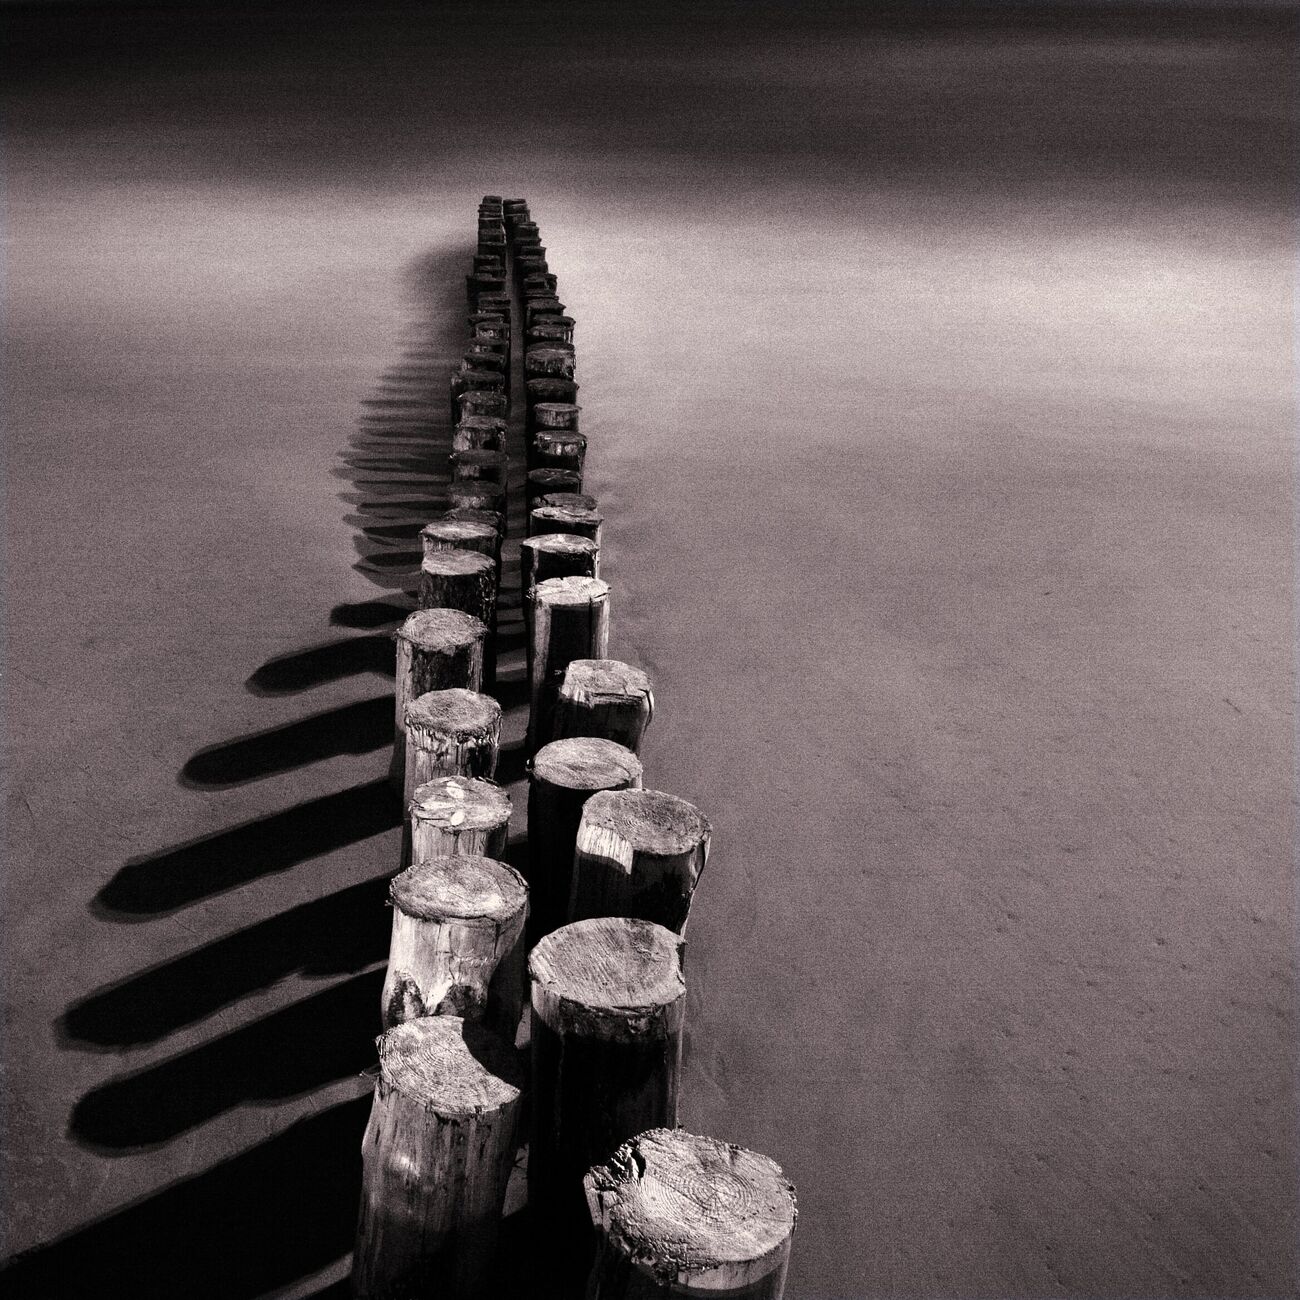 Acheter une photographie 23 x 23 cm, Moonlight shadows. Ref-680-3 - Denis Olivier Photographie d'Art